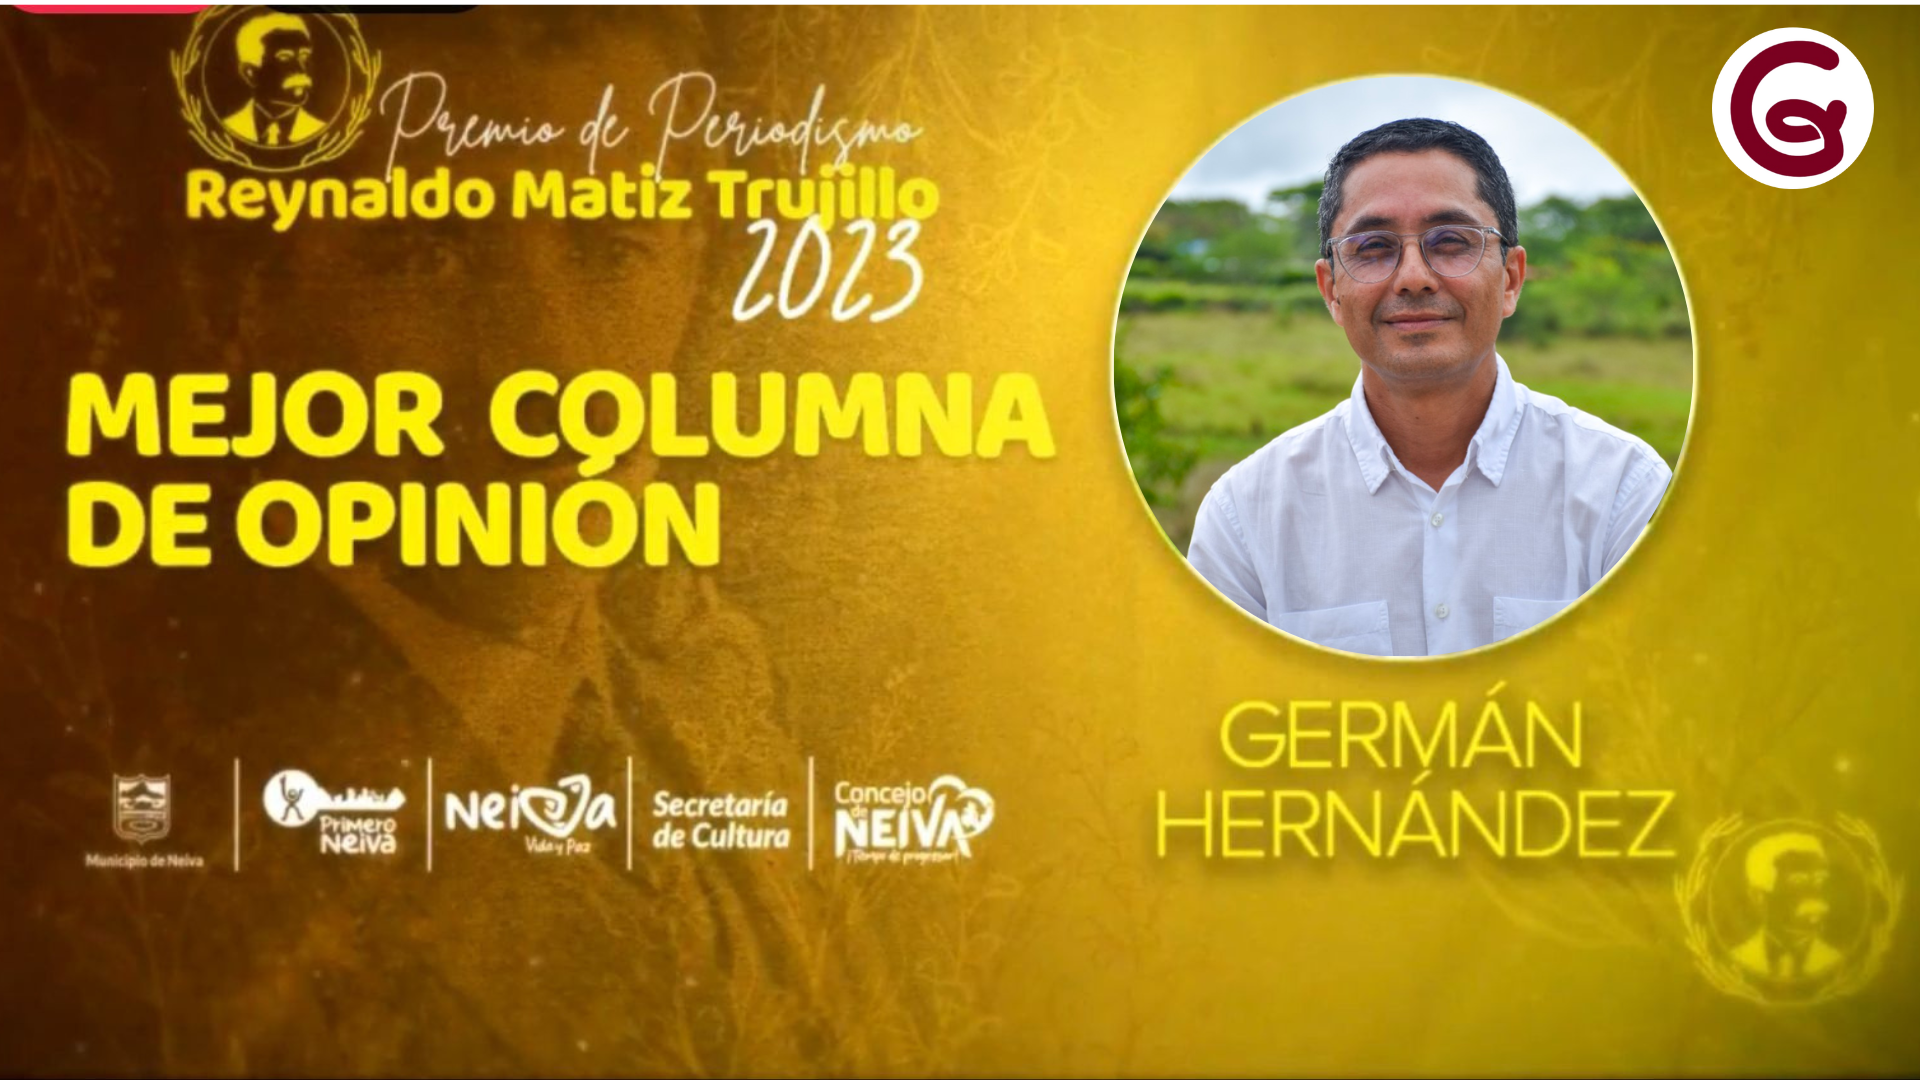 Germán Hernández Vera